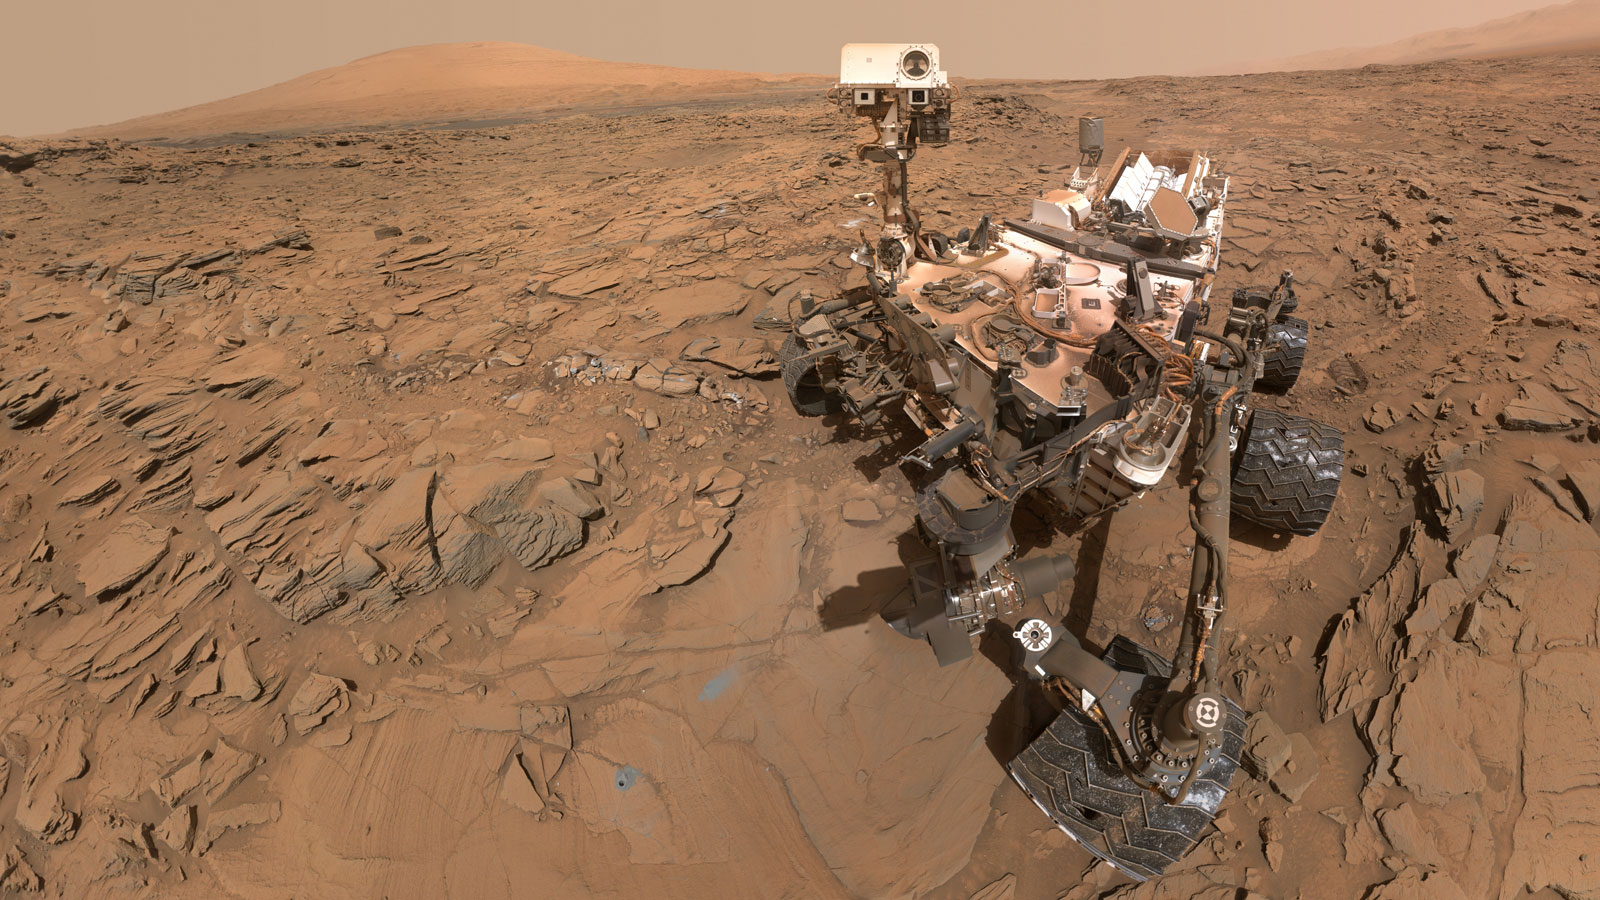 Curiosity rover (Mars Science Laboratory)